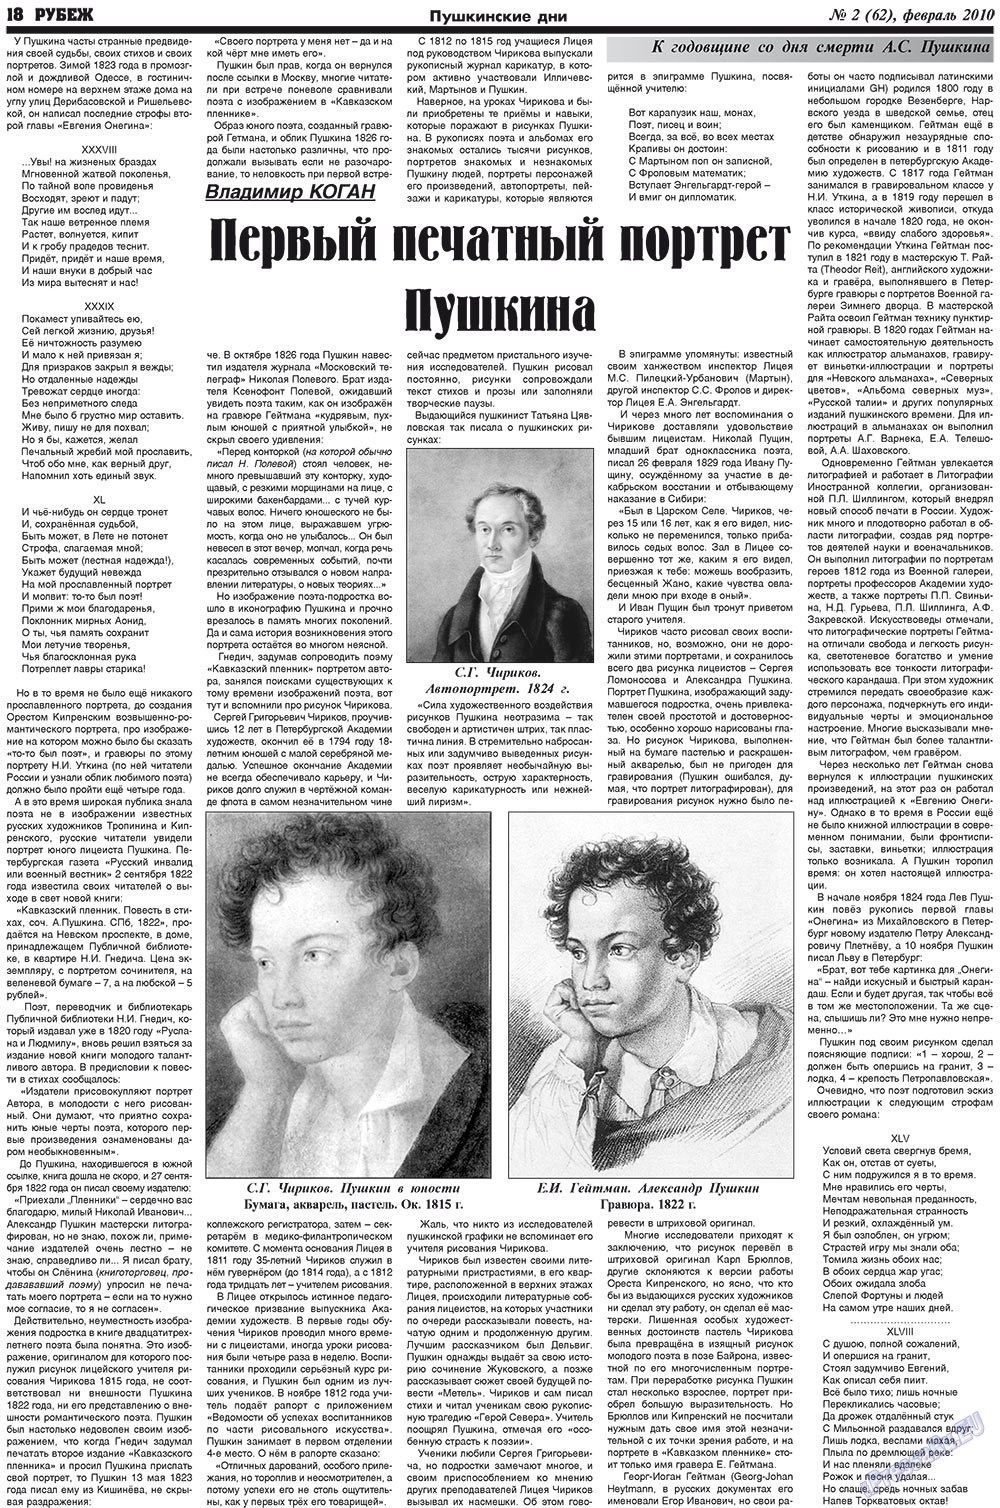 Рубеж, газета. 2010 №2 стр.18